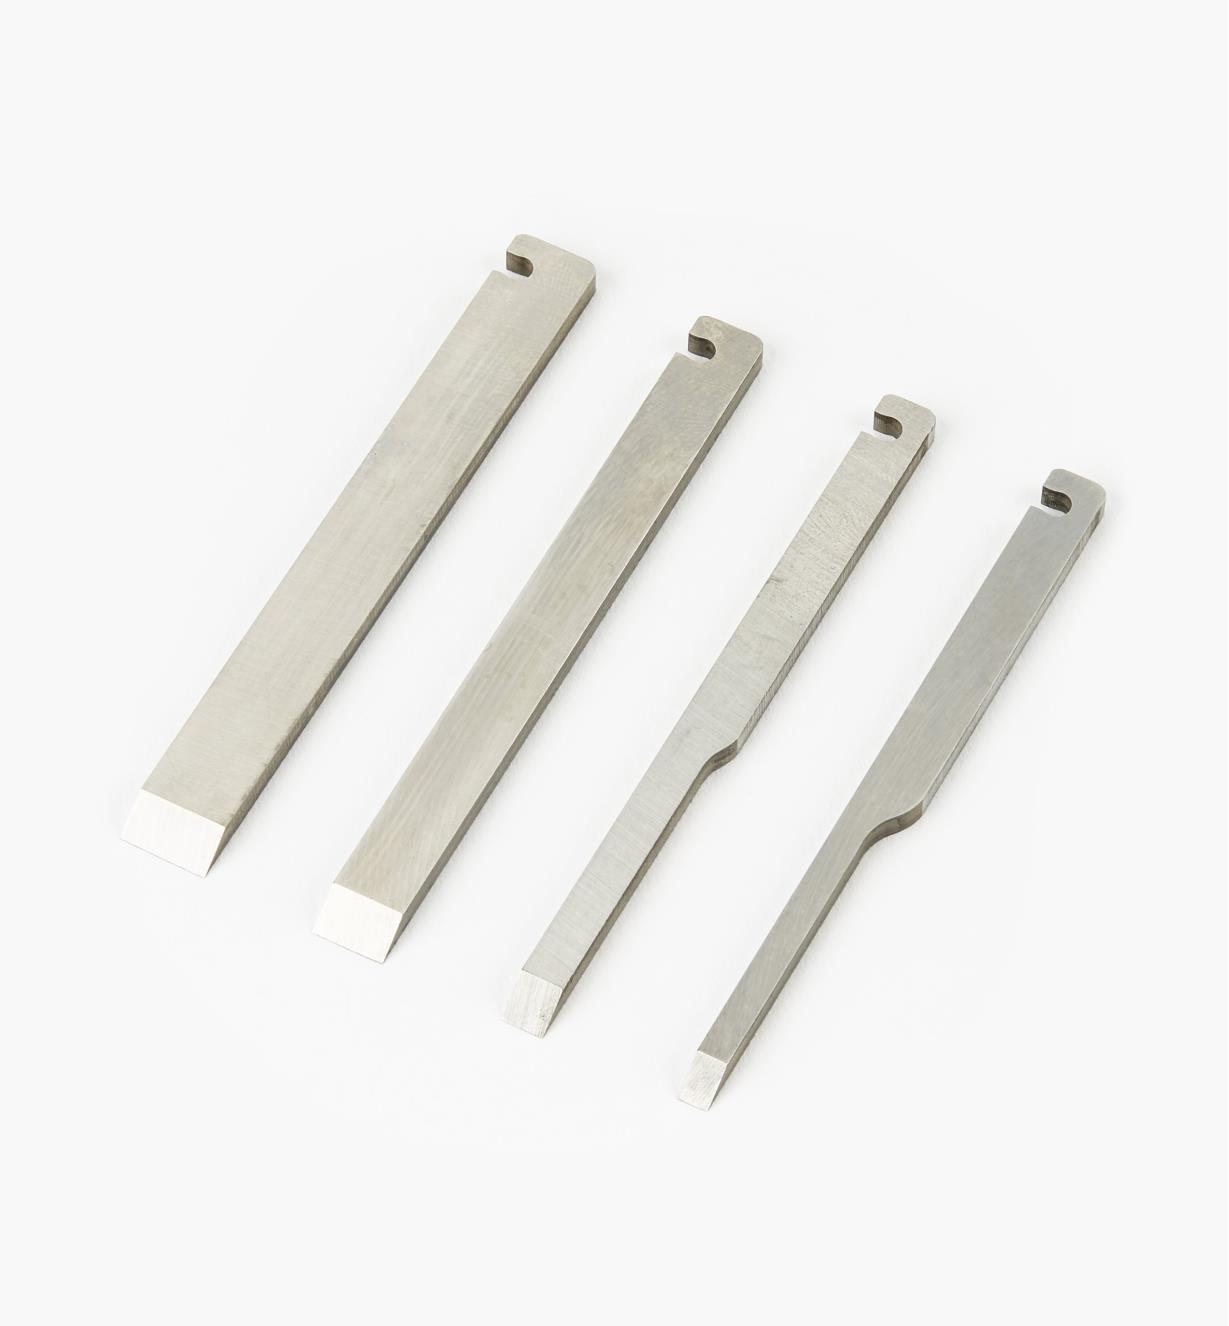 05P5210 - Standard LH Imperial Blades, Set of 4 (1/8", 3/16", 5/16", 3/8")